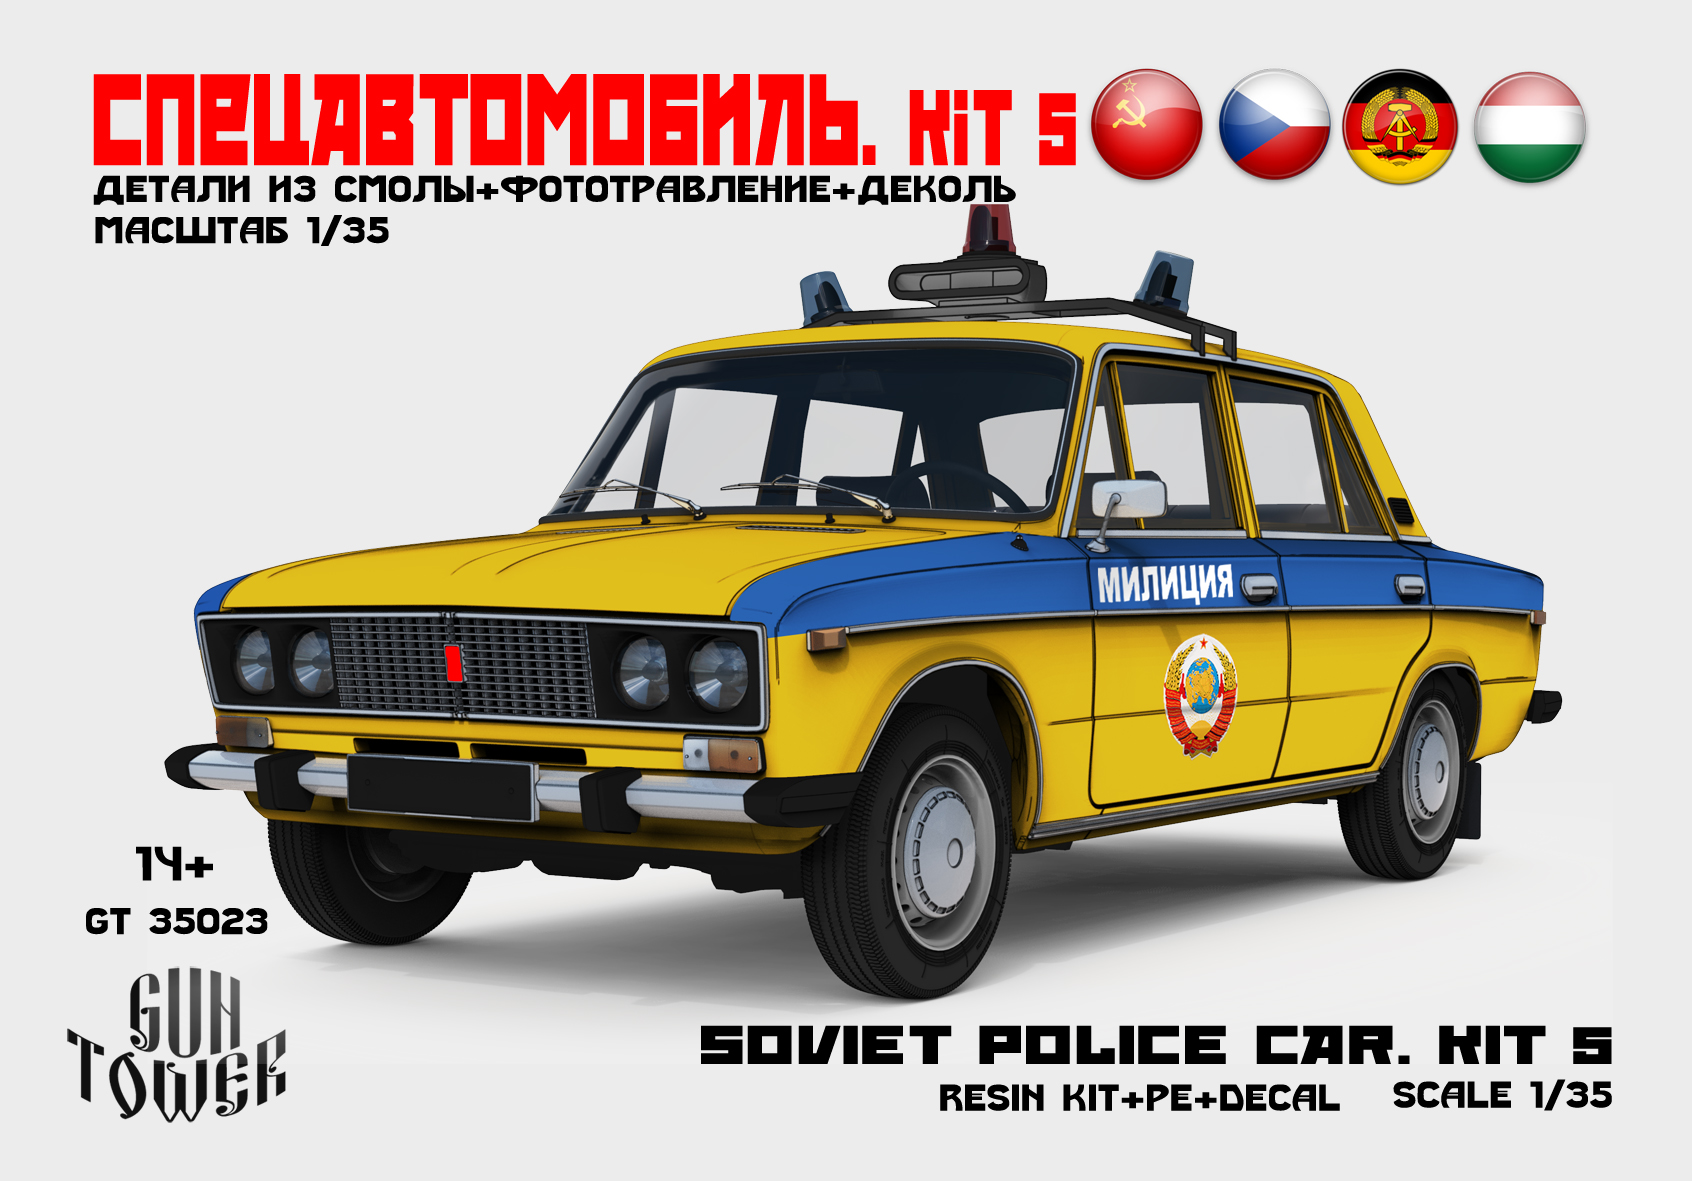 Soviet police car.Kit 5 (2106)